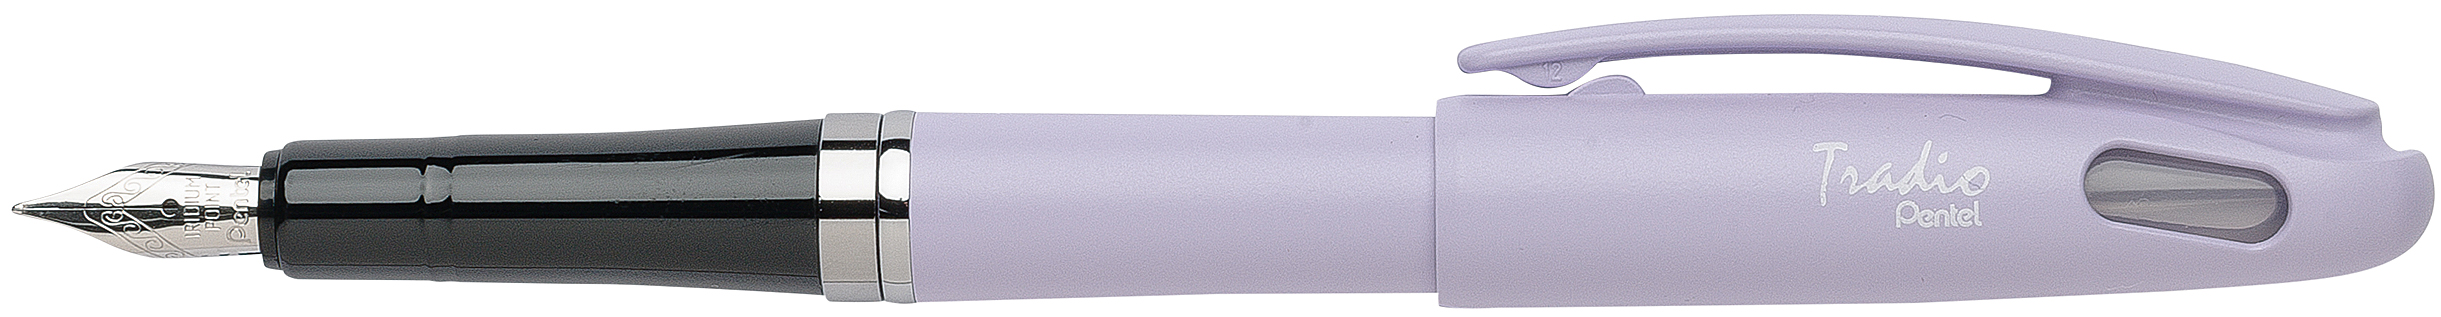 Pentel Tradio Pastel - Stylo plume - corps violet